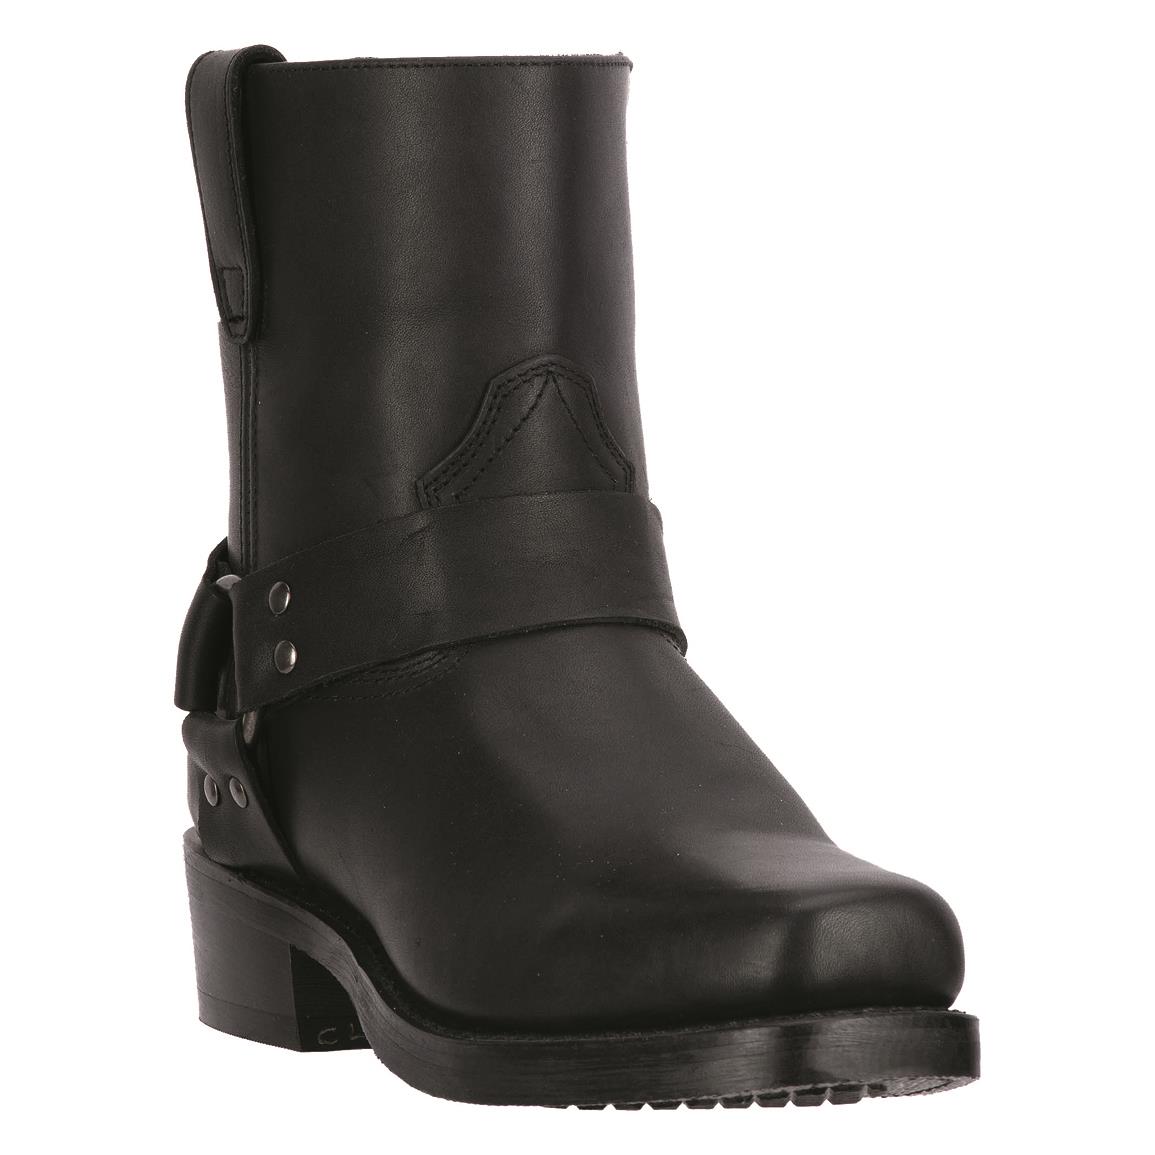 Dingo Men's Rev Up 7" Leather Side-zip Harness Boots, Black